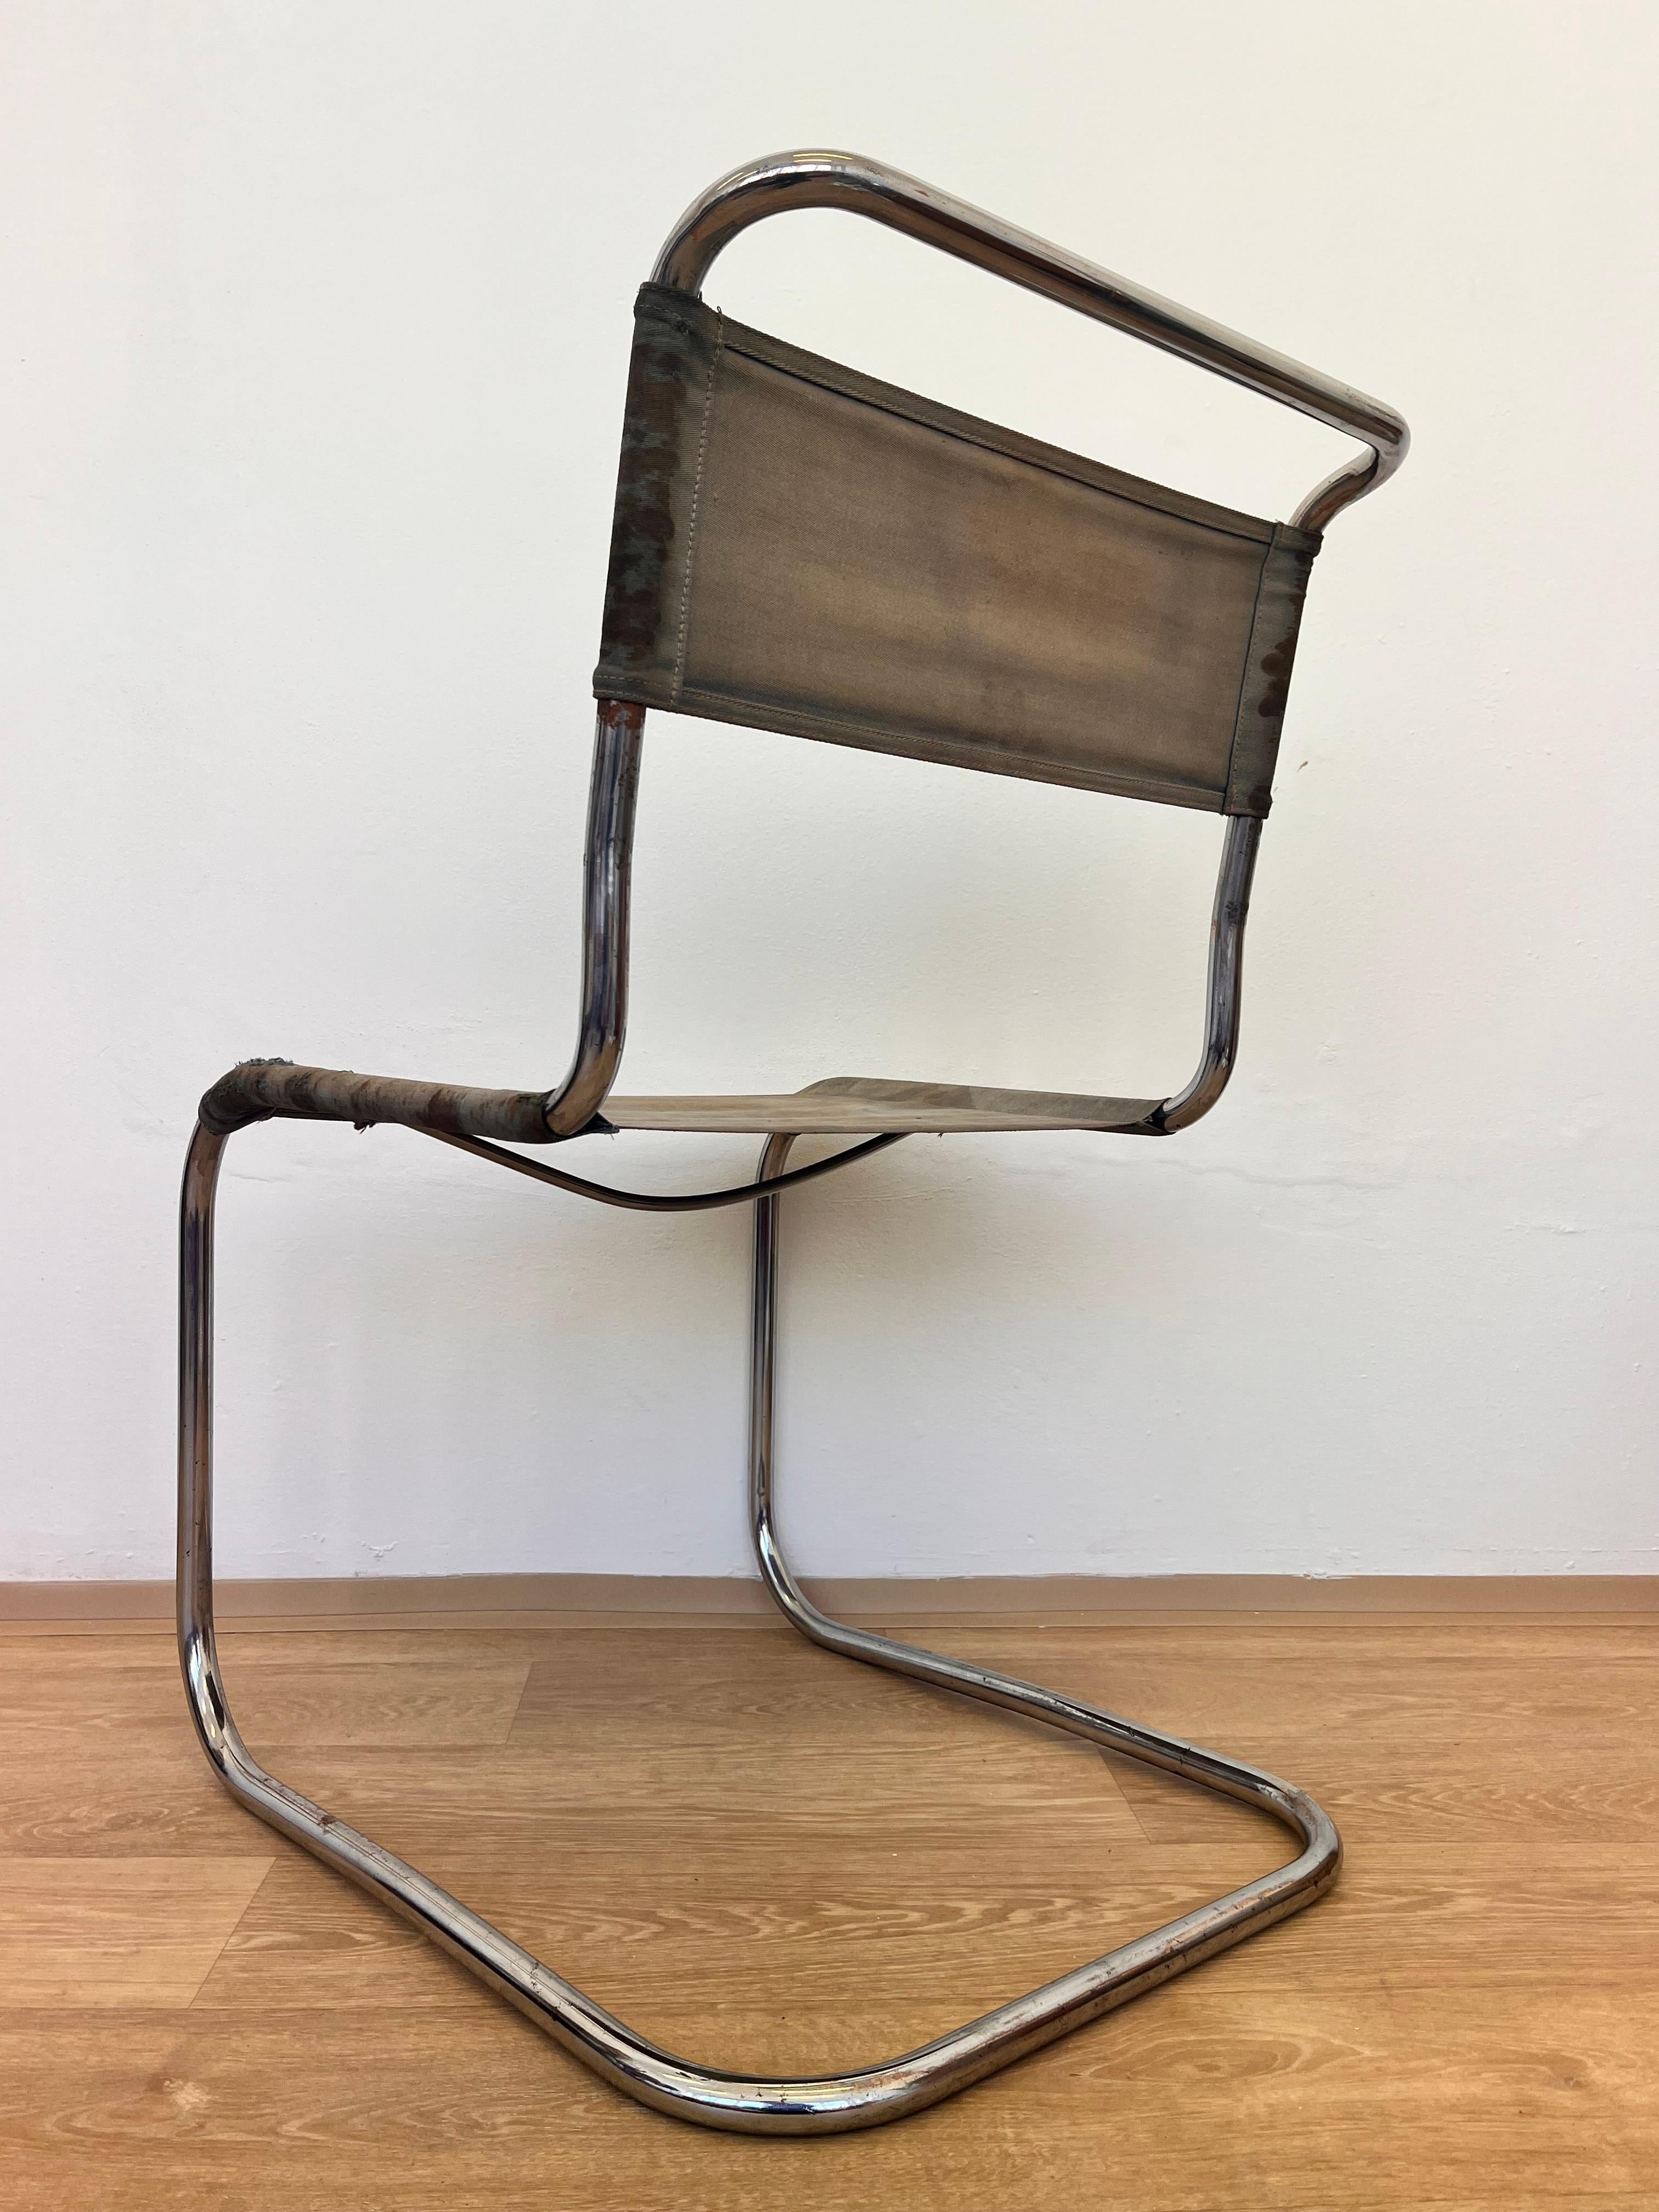 Tubular Steel Chrome Bauhaus Chair / THONET, Mart Stam, 1930 (Eisengarn) For Sale 2